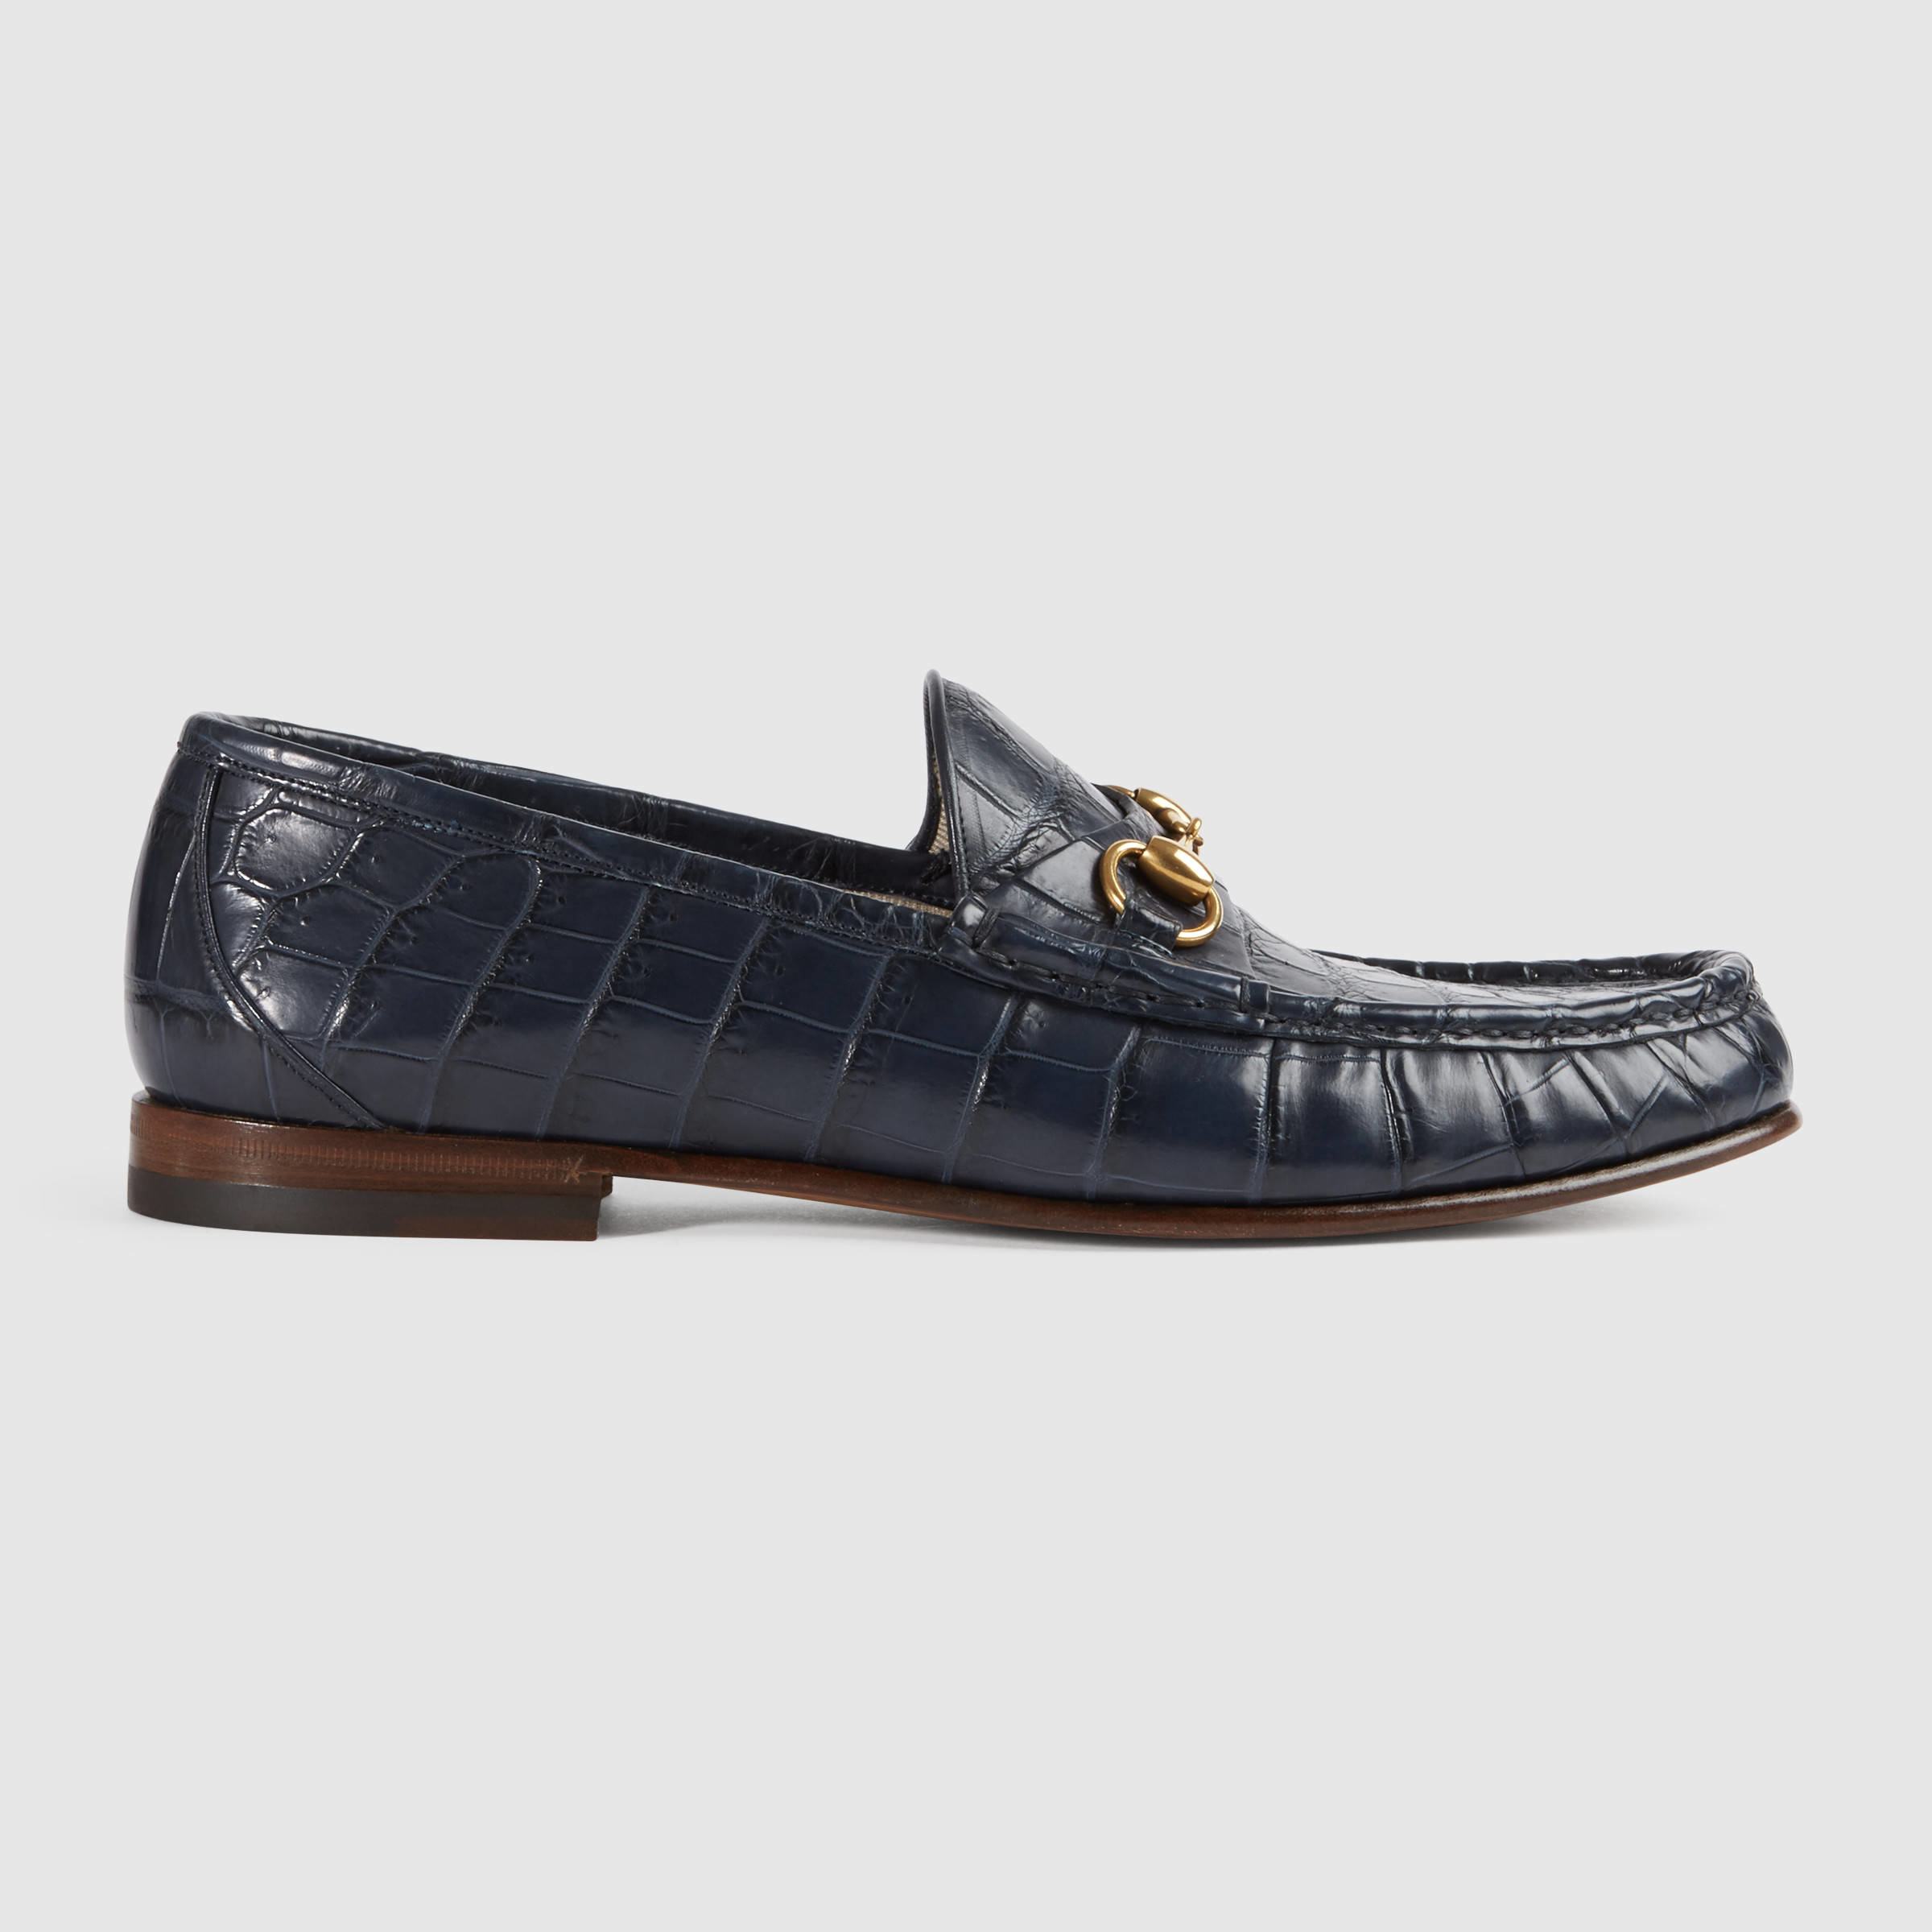 Lyst - Gucci 1953 Horsebit Crocodile Loafer in Blue for Men